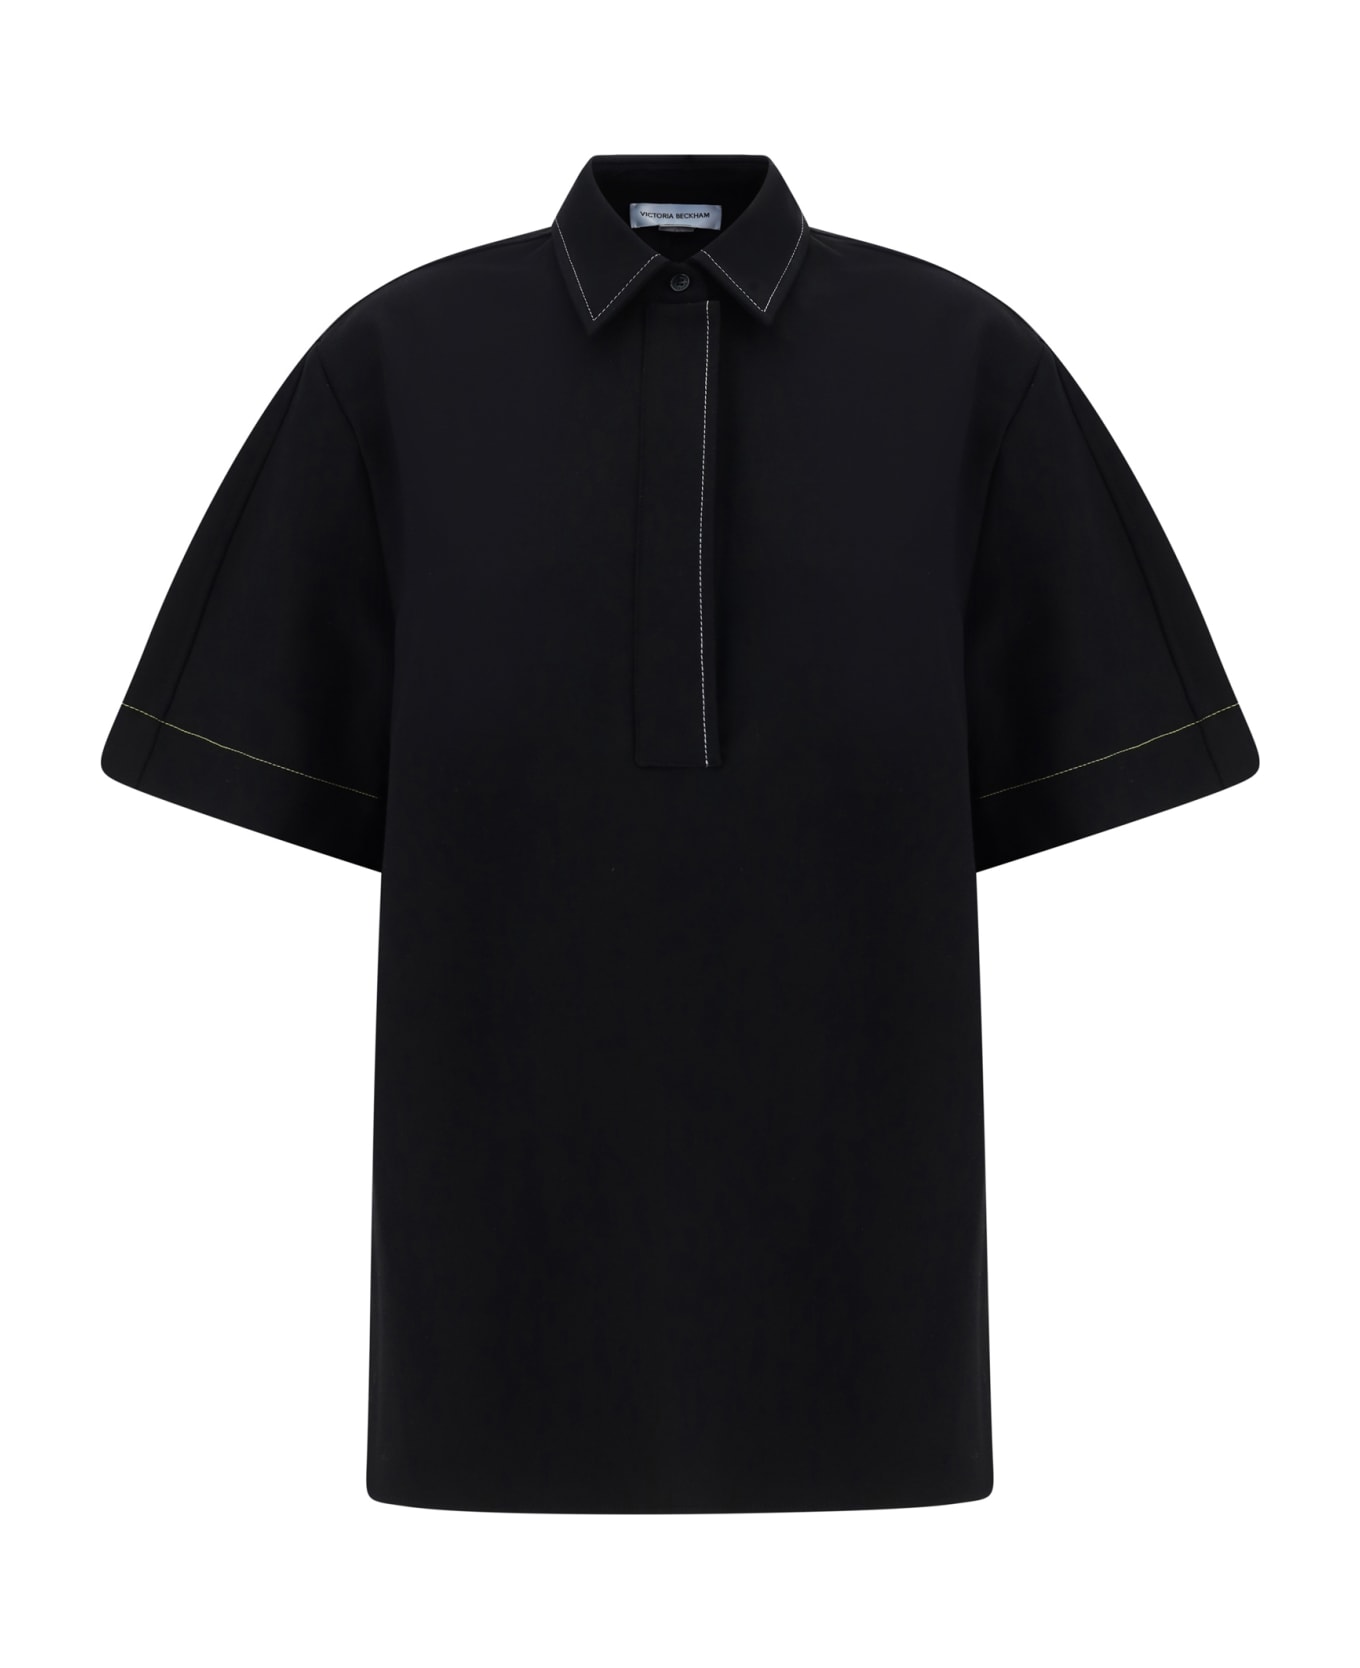 Victoria Beckham Polo Shirt - Nero ポロシャツ